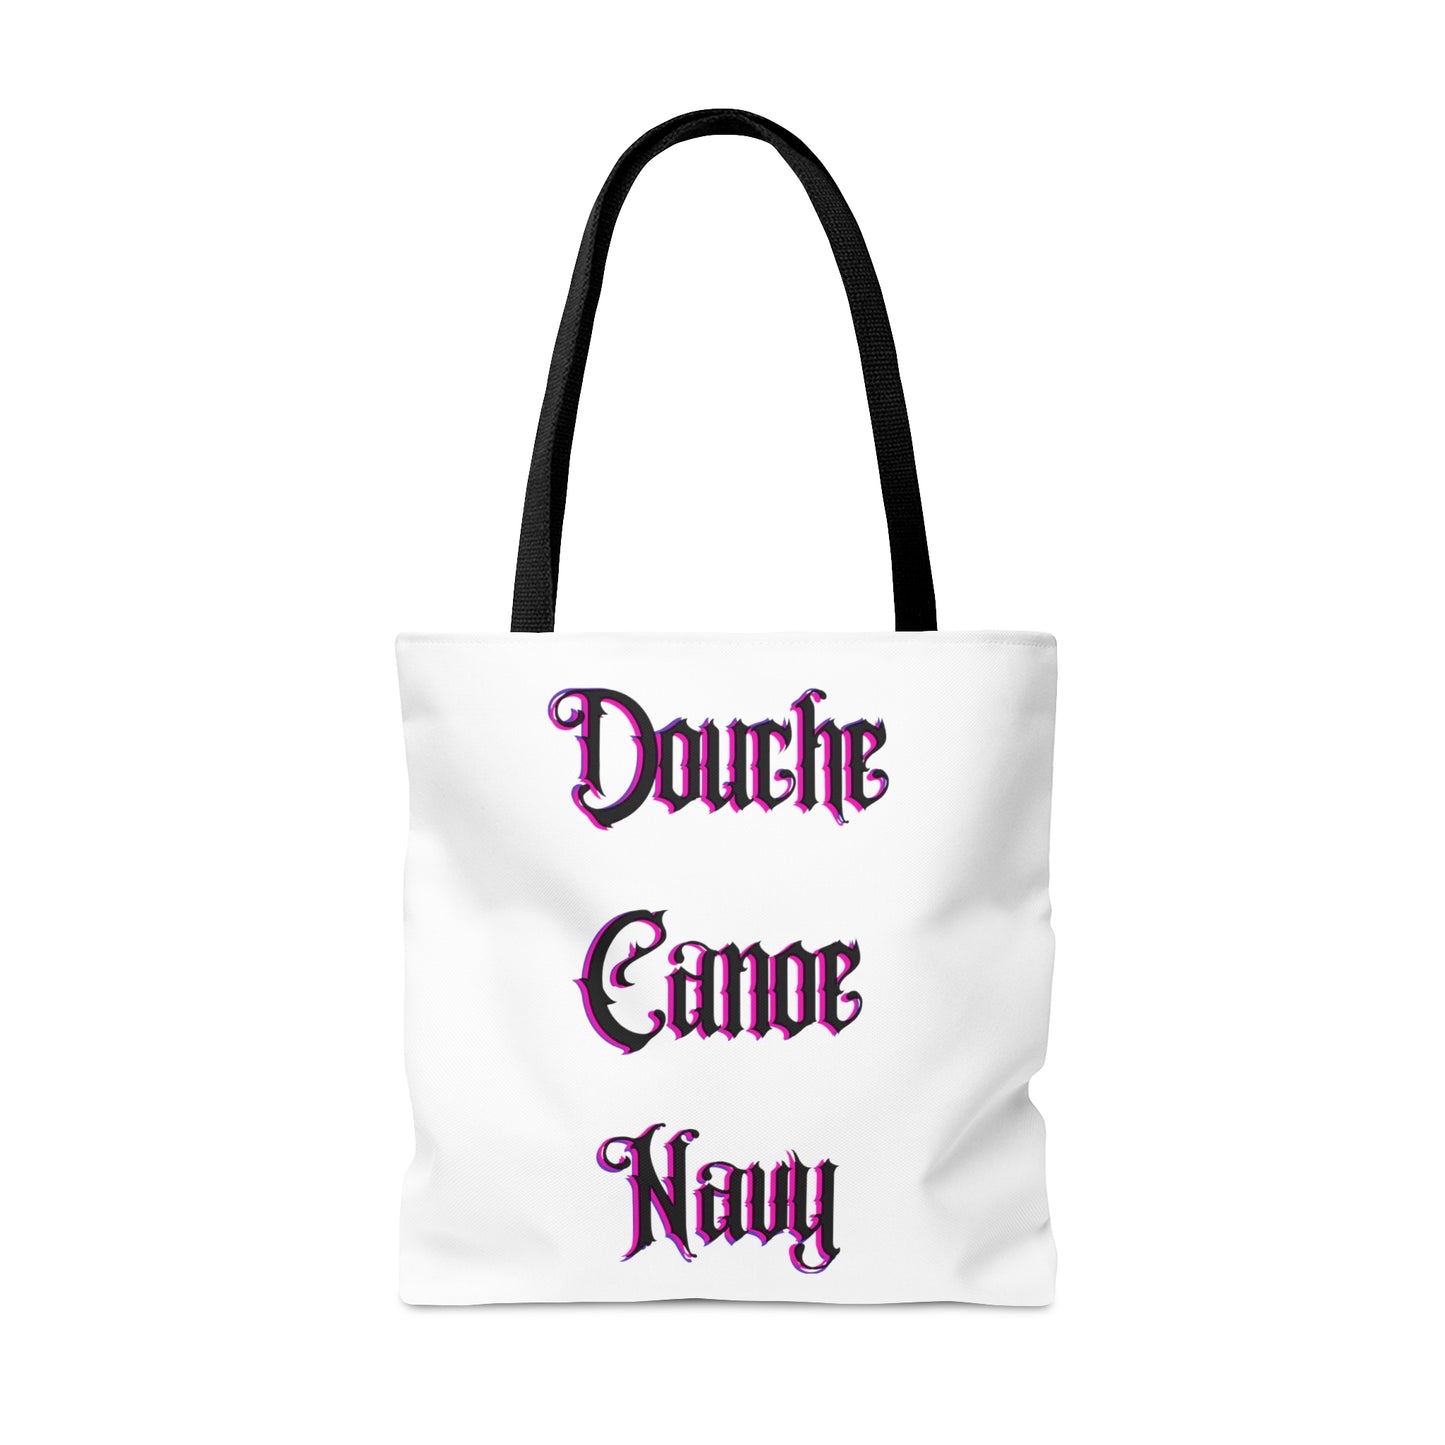 Douche Canoe Tote Bag